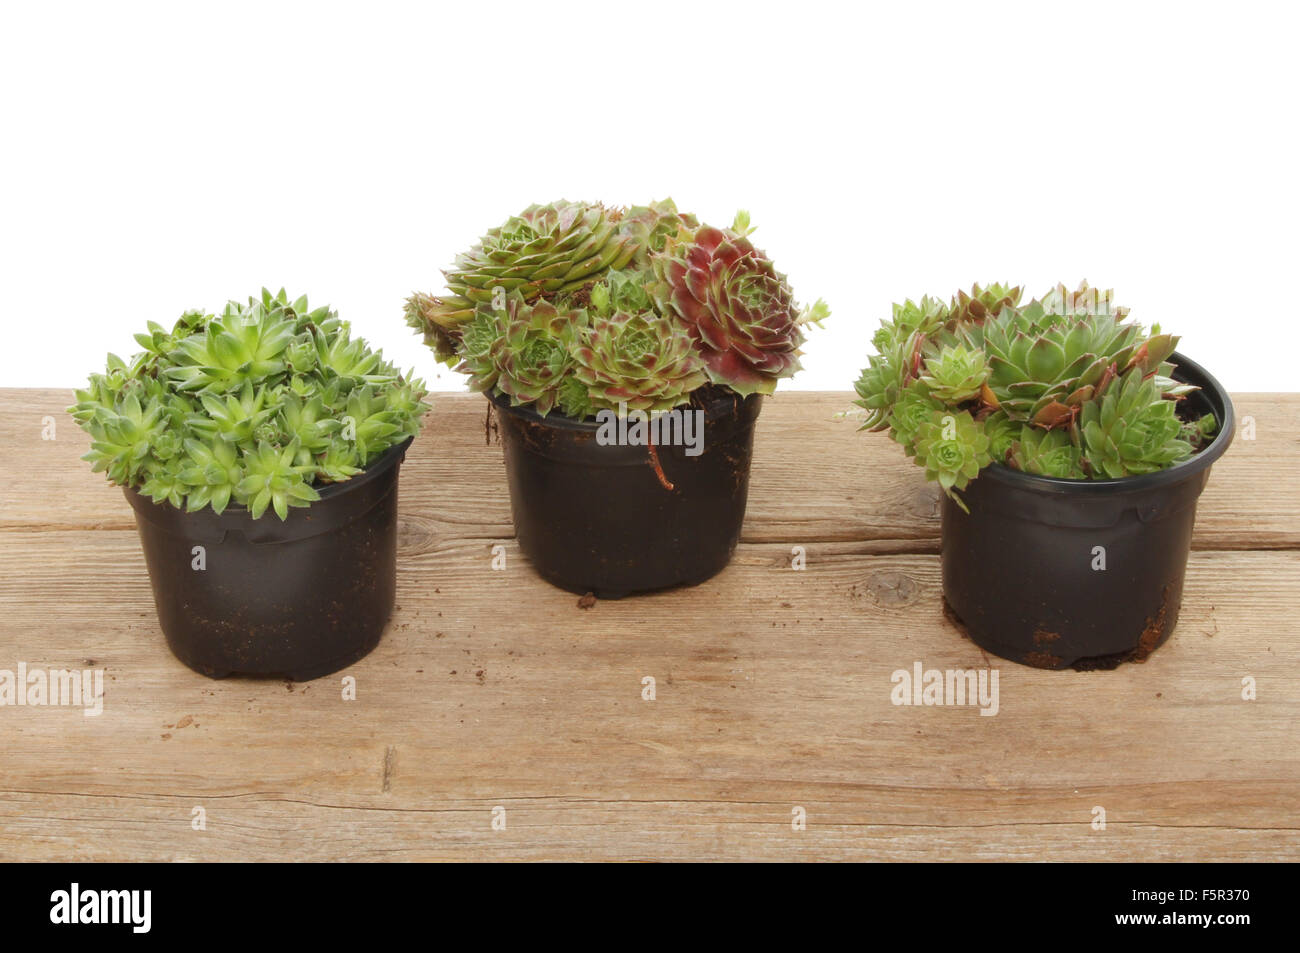 Three sempervivum plants in pots on a wooden board Stock Photo